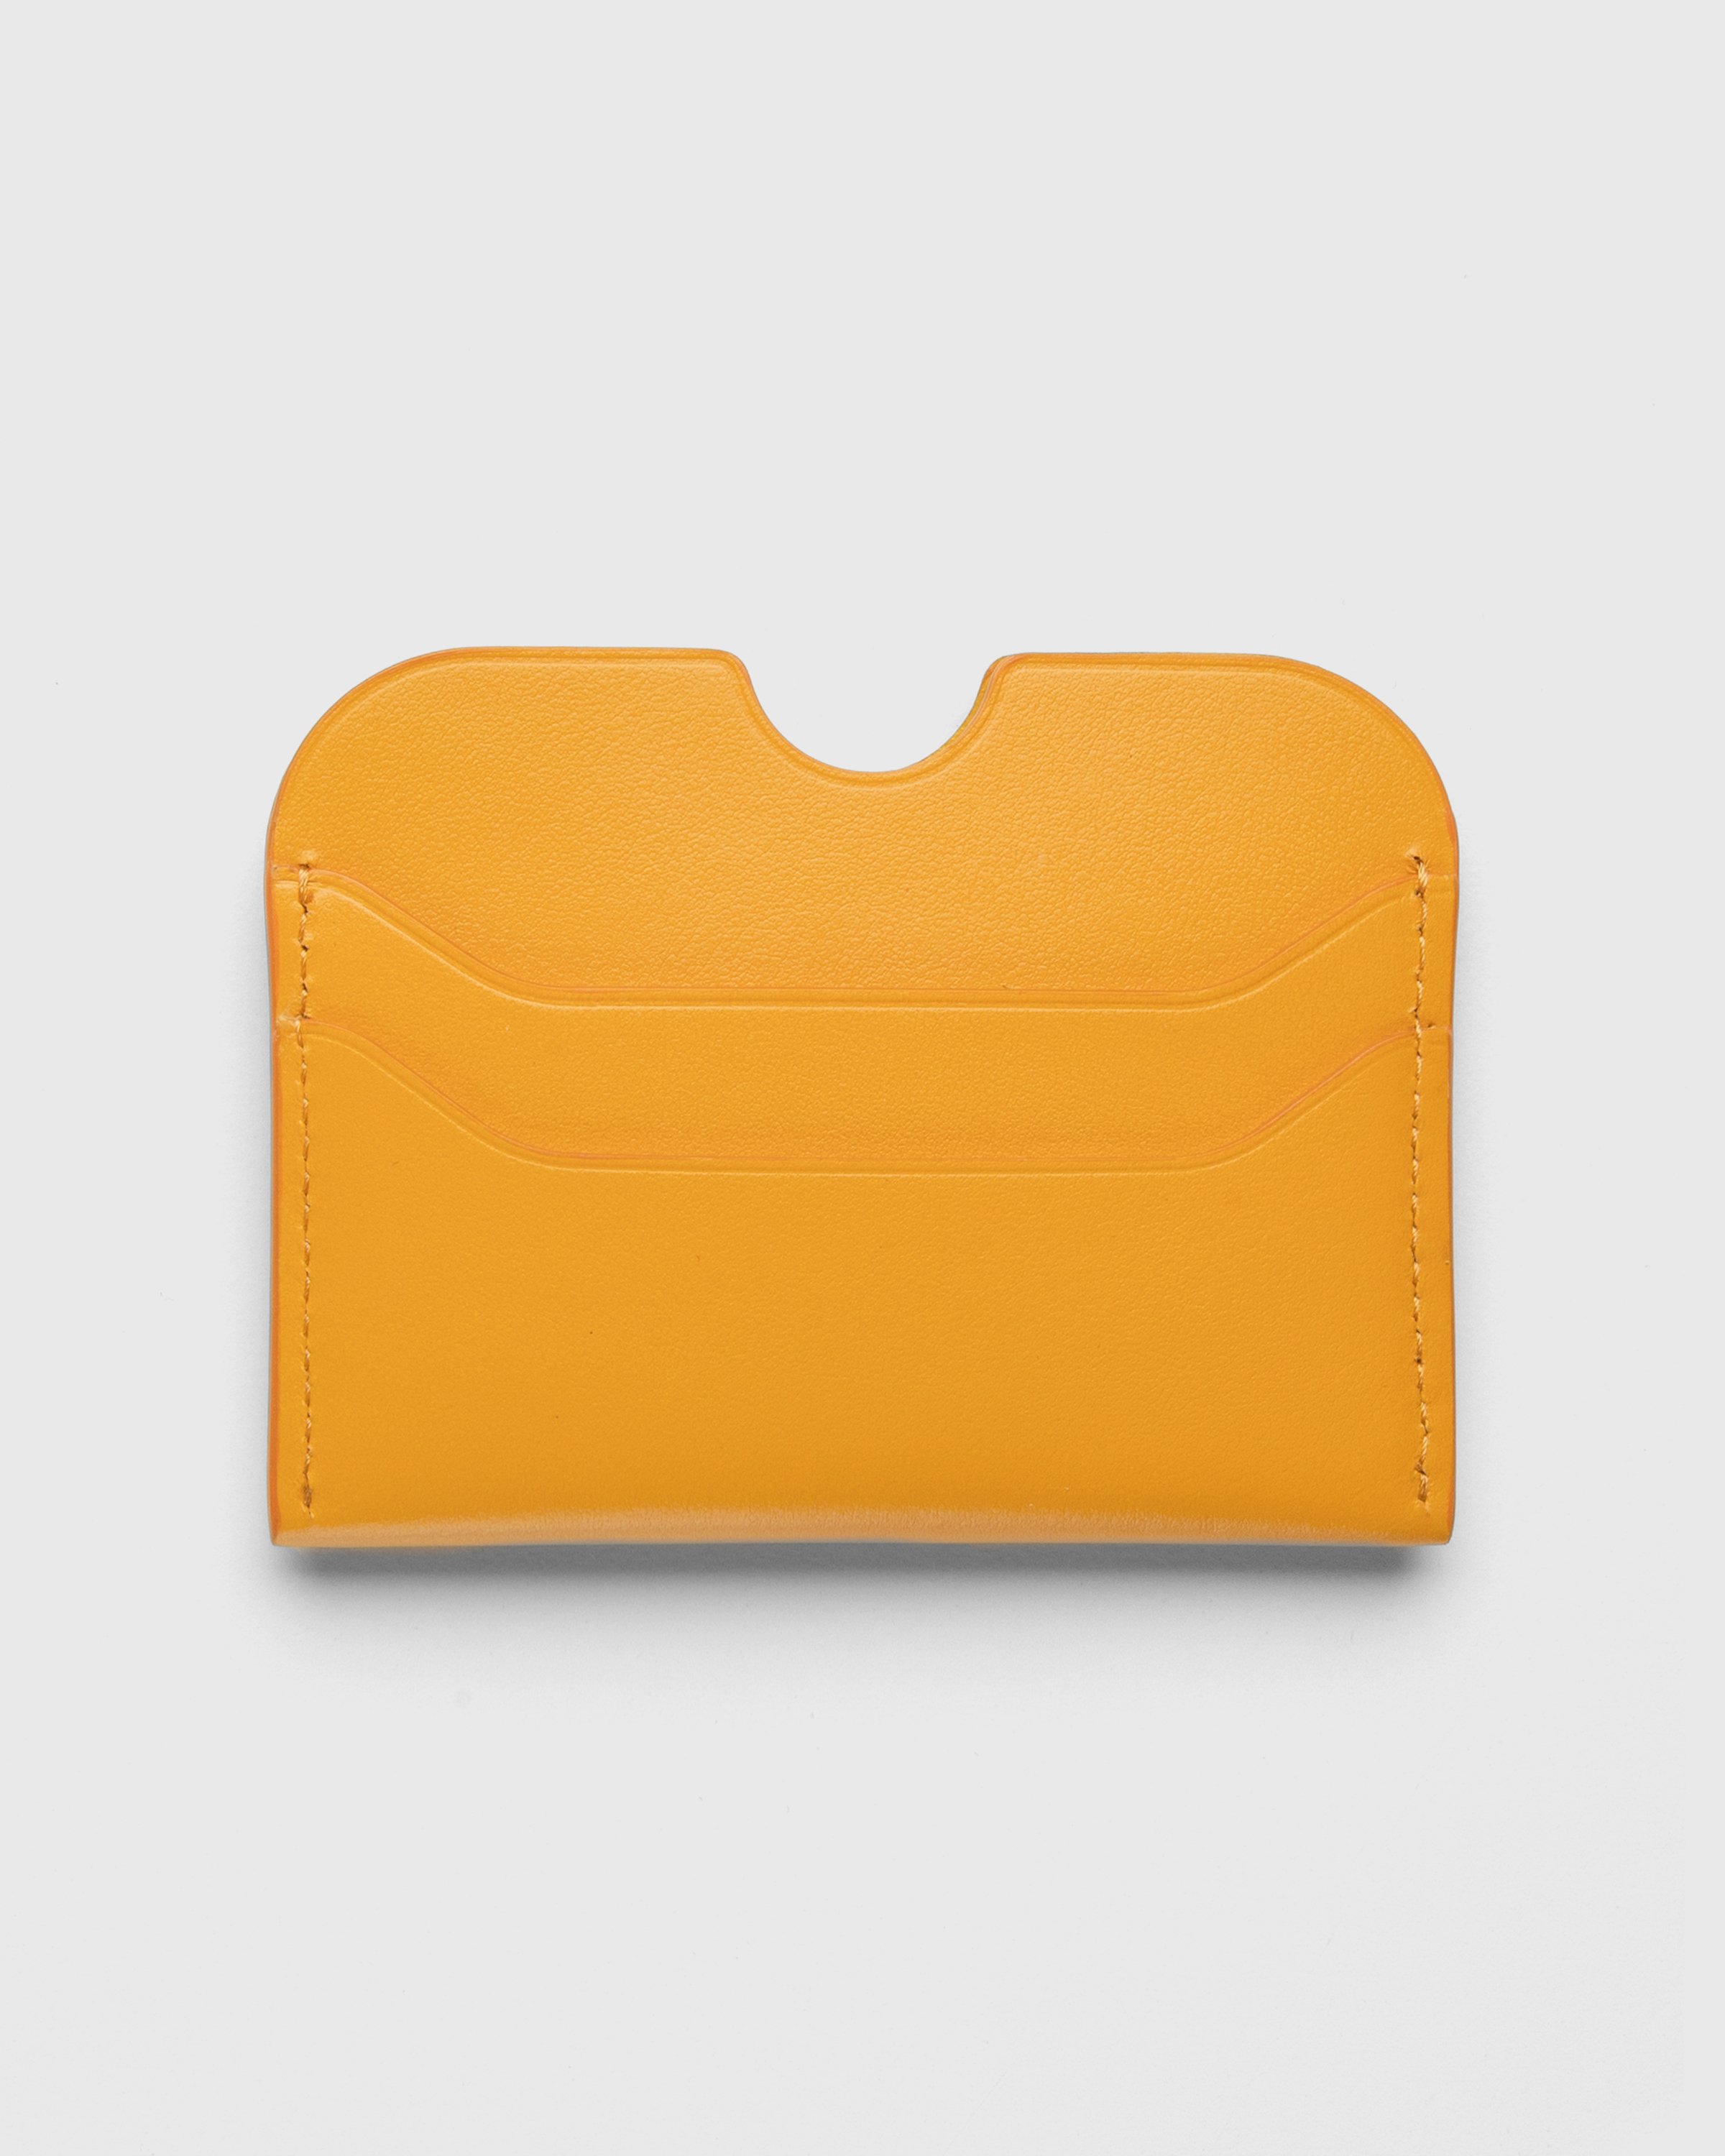 Acne Studios - Leather Card Holder Orange - Accessories - Orange - Image 2